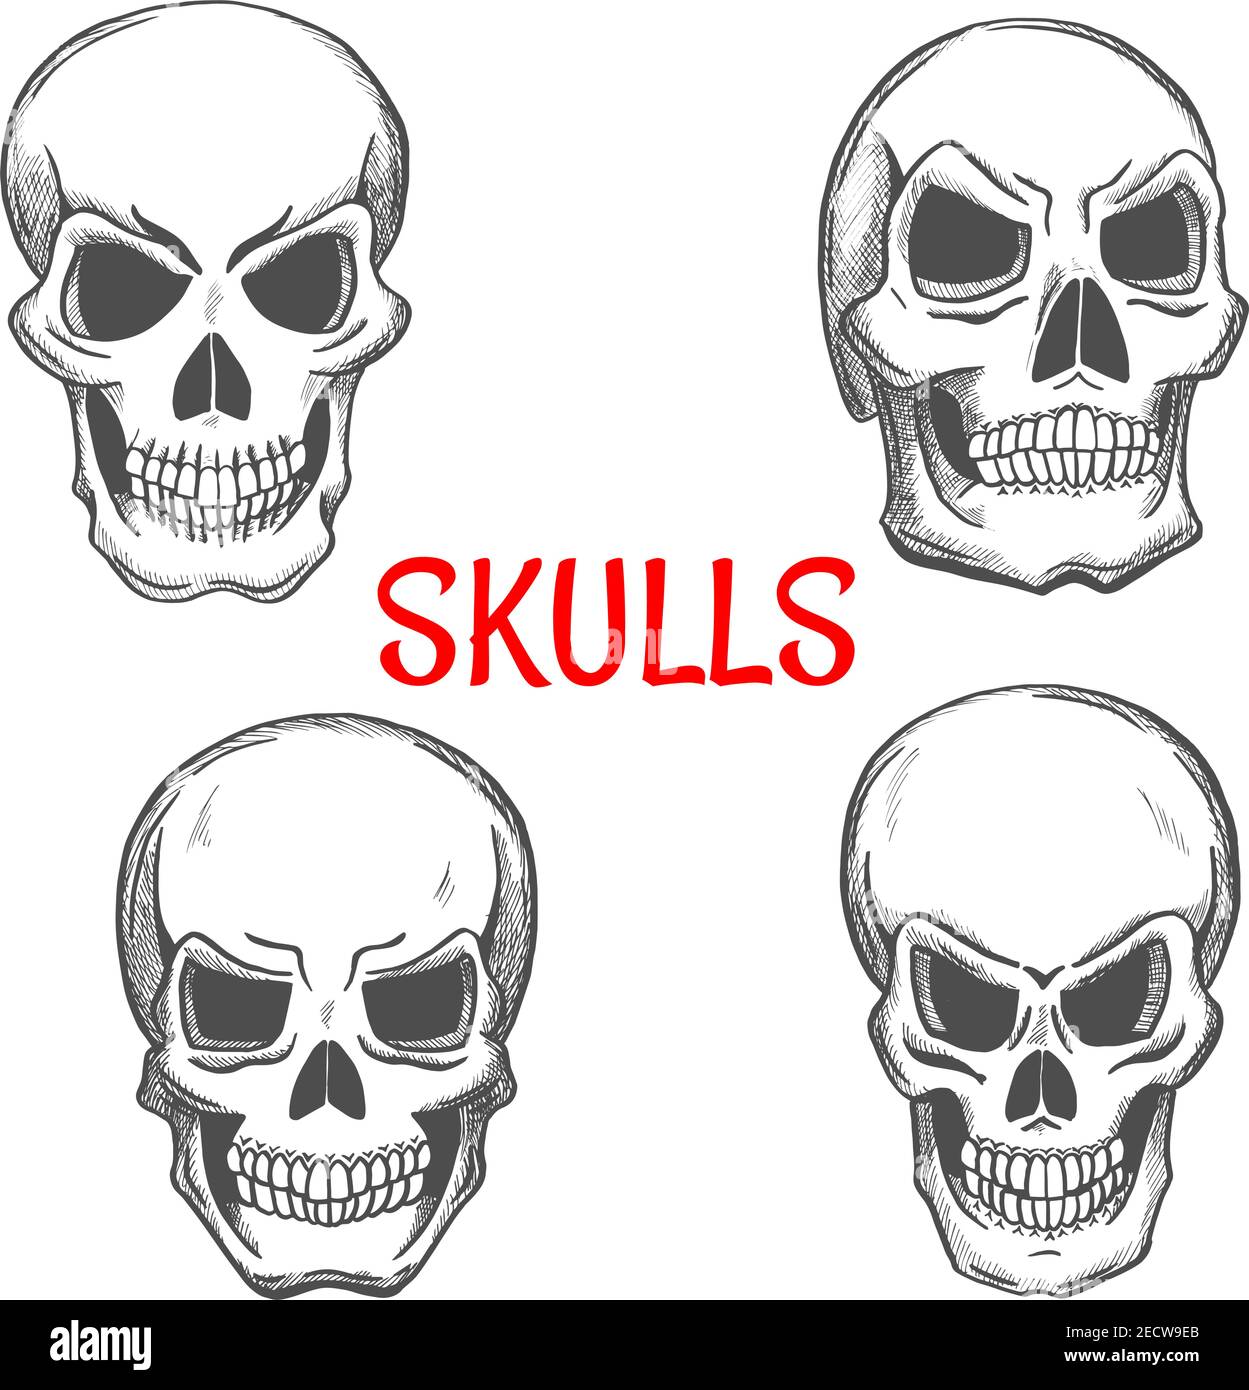 Skulls sketch icons. Skeleton craniums crossbones for halloween decoration, cartoon, label, tattoo, religious decoration elements Stock Vector